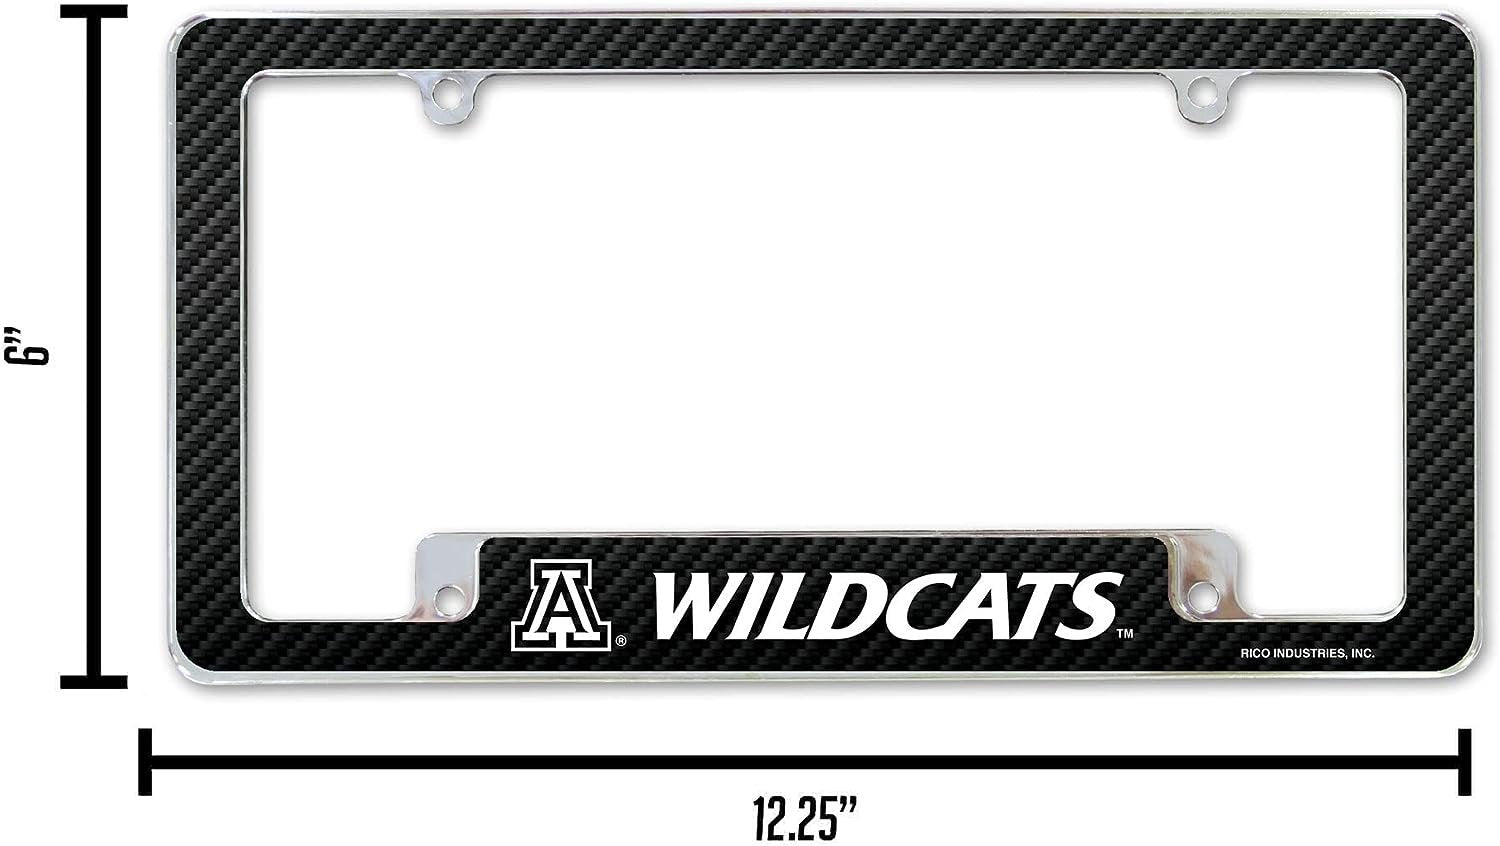 University of Arizona Wildcats Metal License Plate Frame Chrome Tag Cover 12x6 Inch Carbon Fiber Design